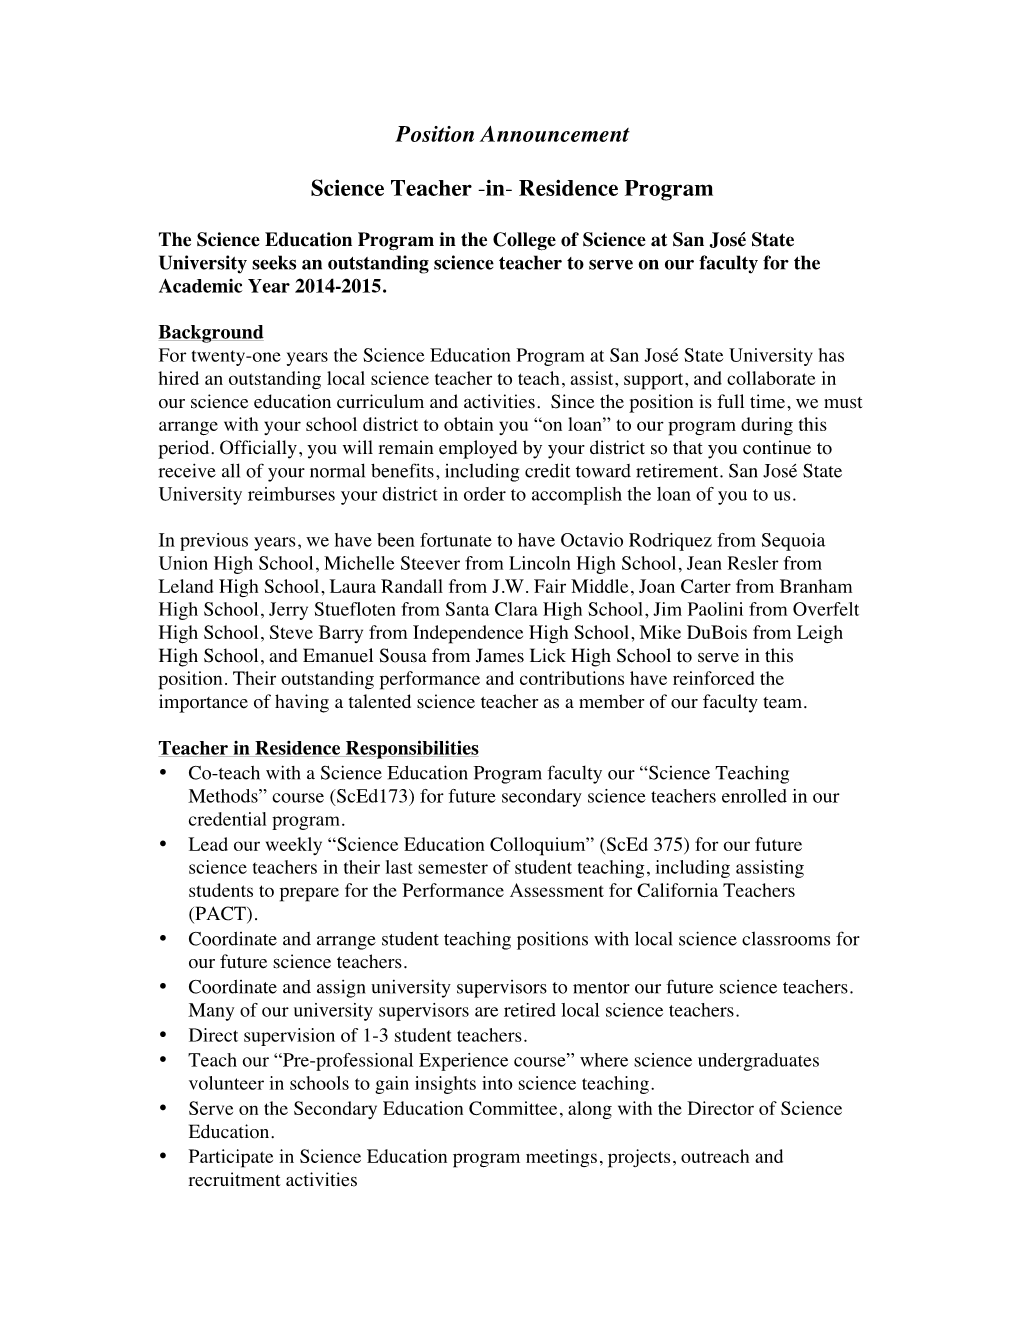 Position Announcement Science Teacher -In- Residence Program